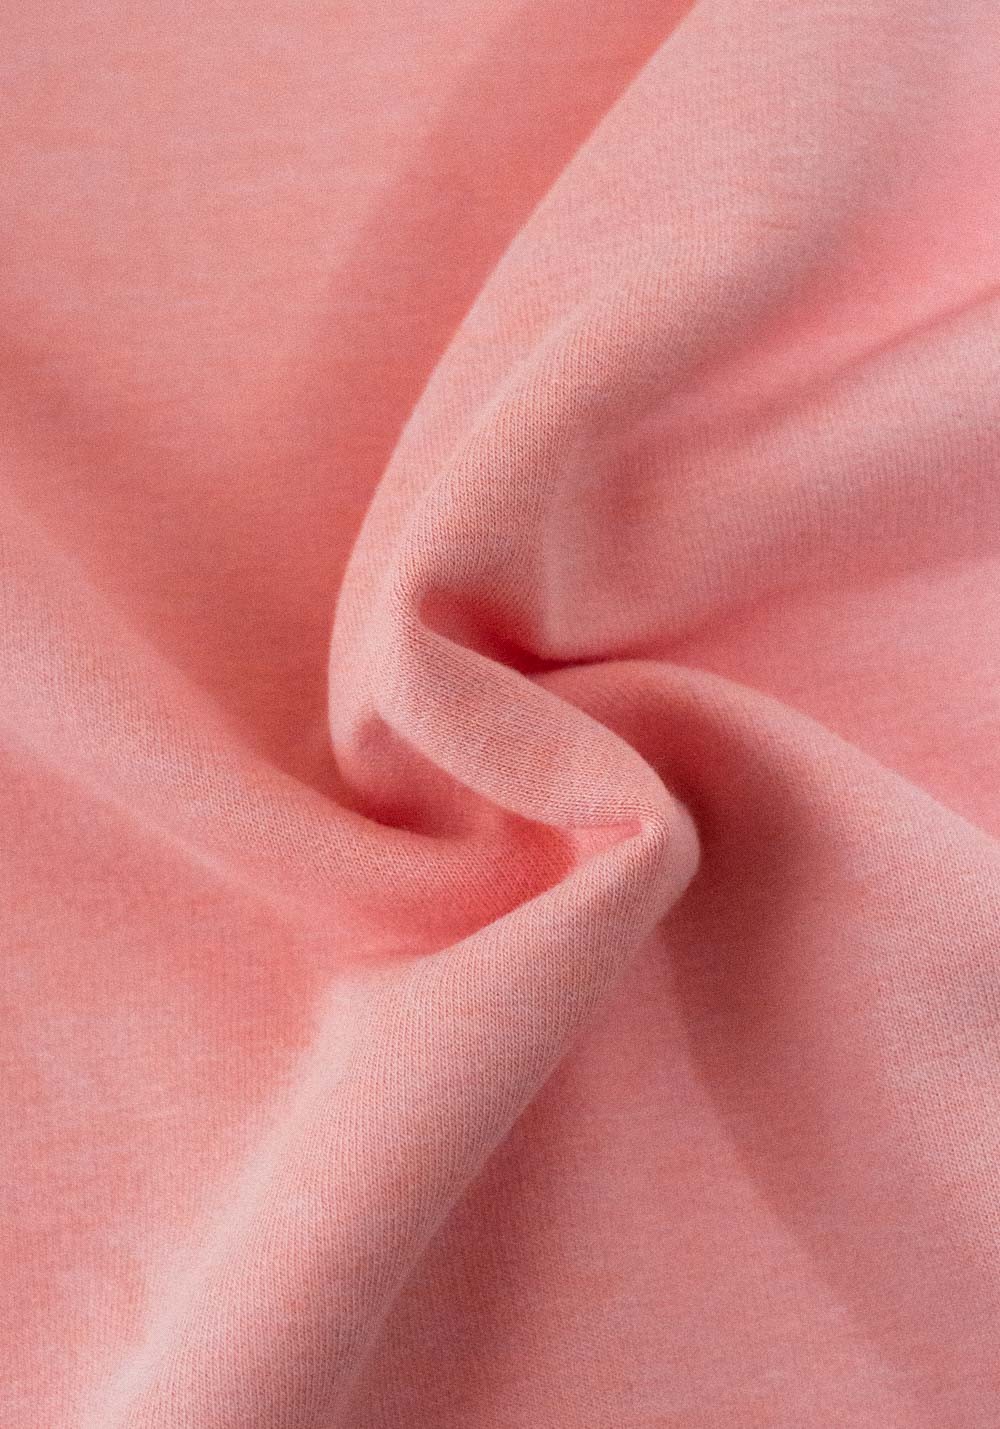 https://www.littlefabrics.com/10541/tissu-molleton-bio-pink.jpg